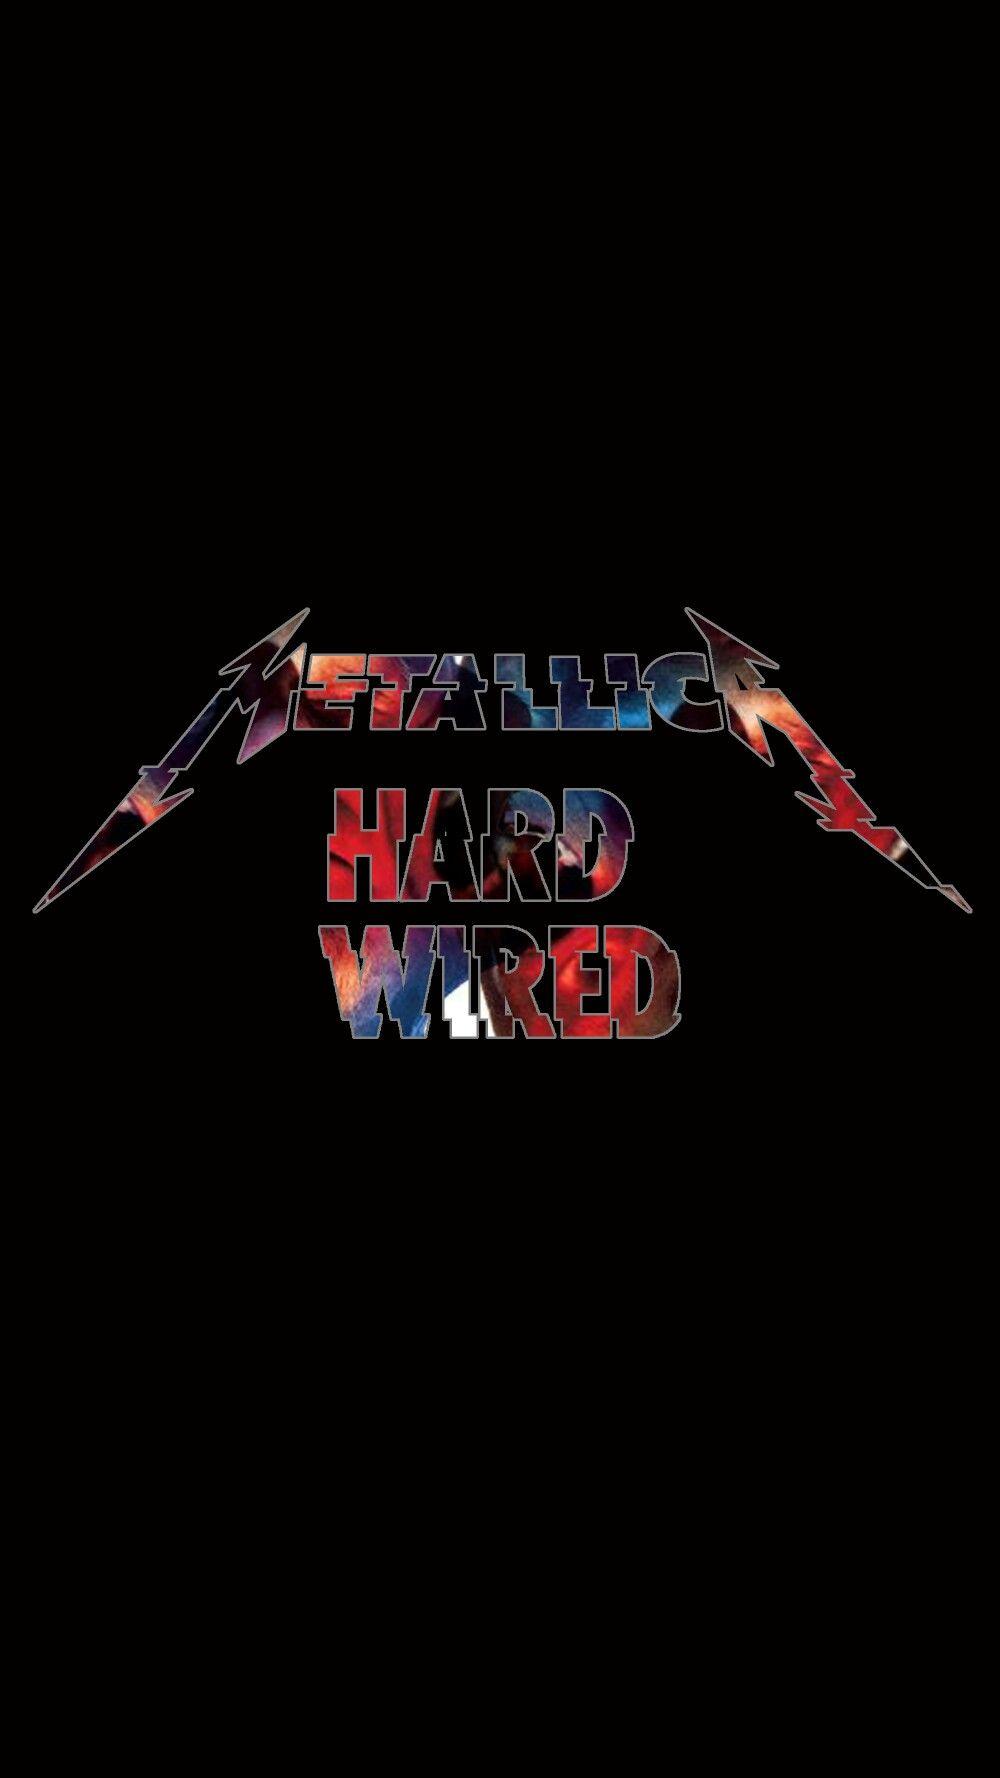 Wallpaper android 5 #metallica #hardwired. Metallica song, Metallica, Metallica logo